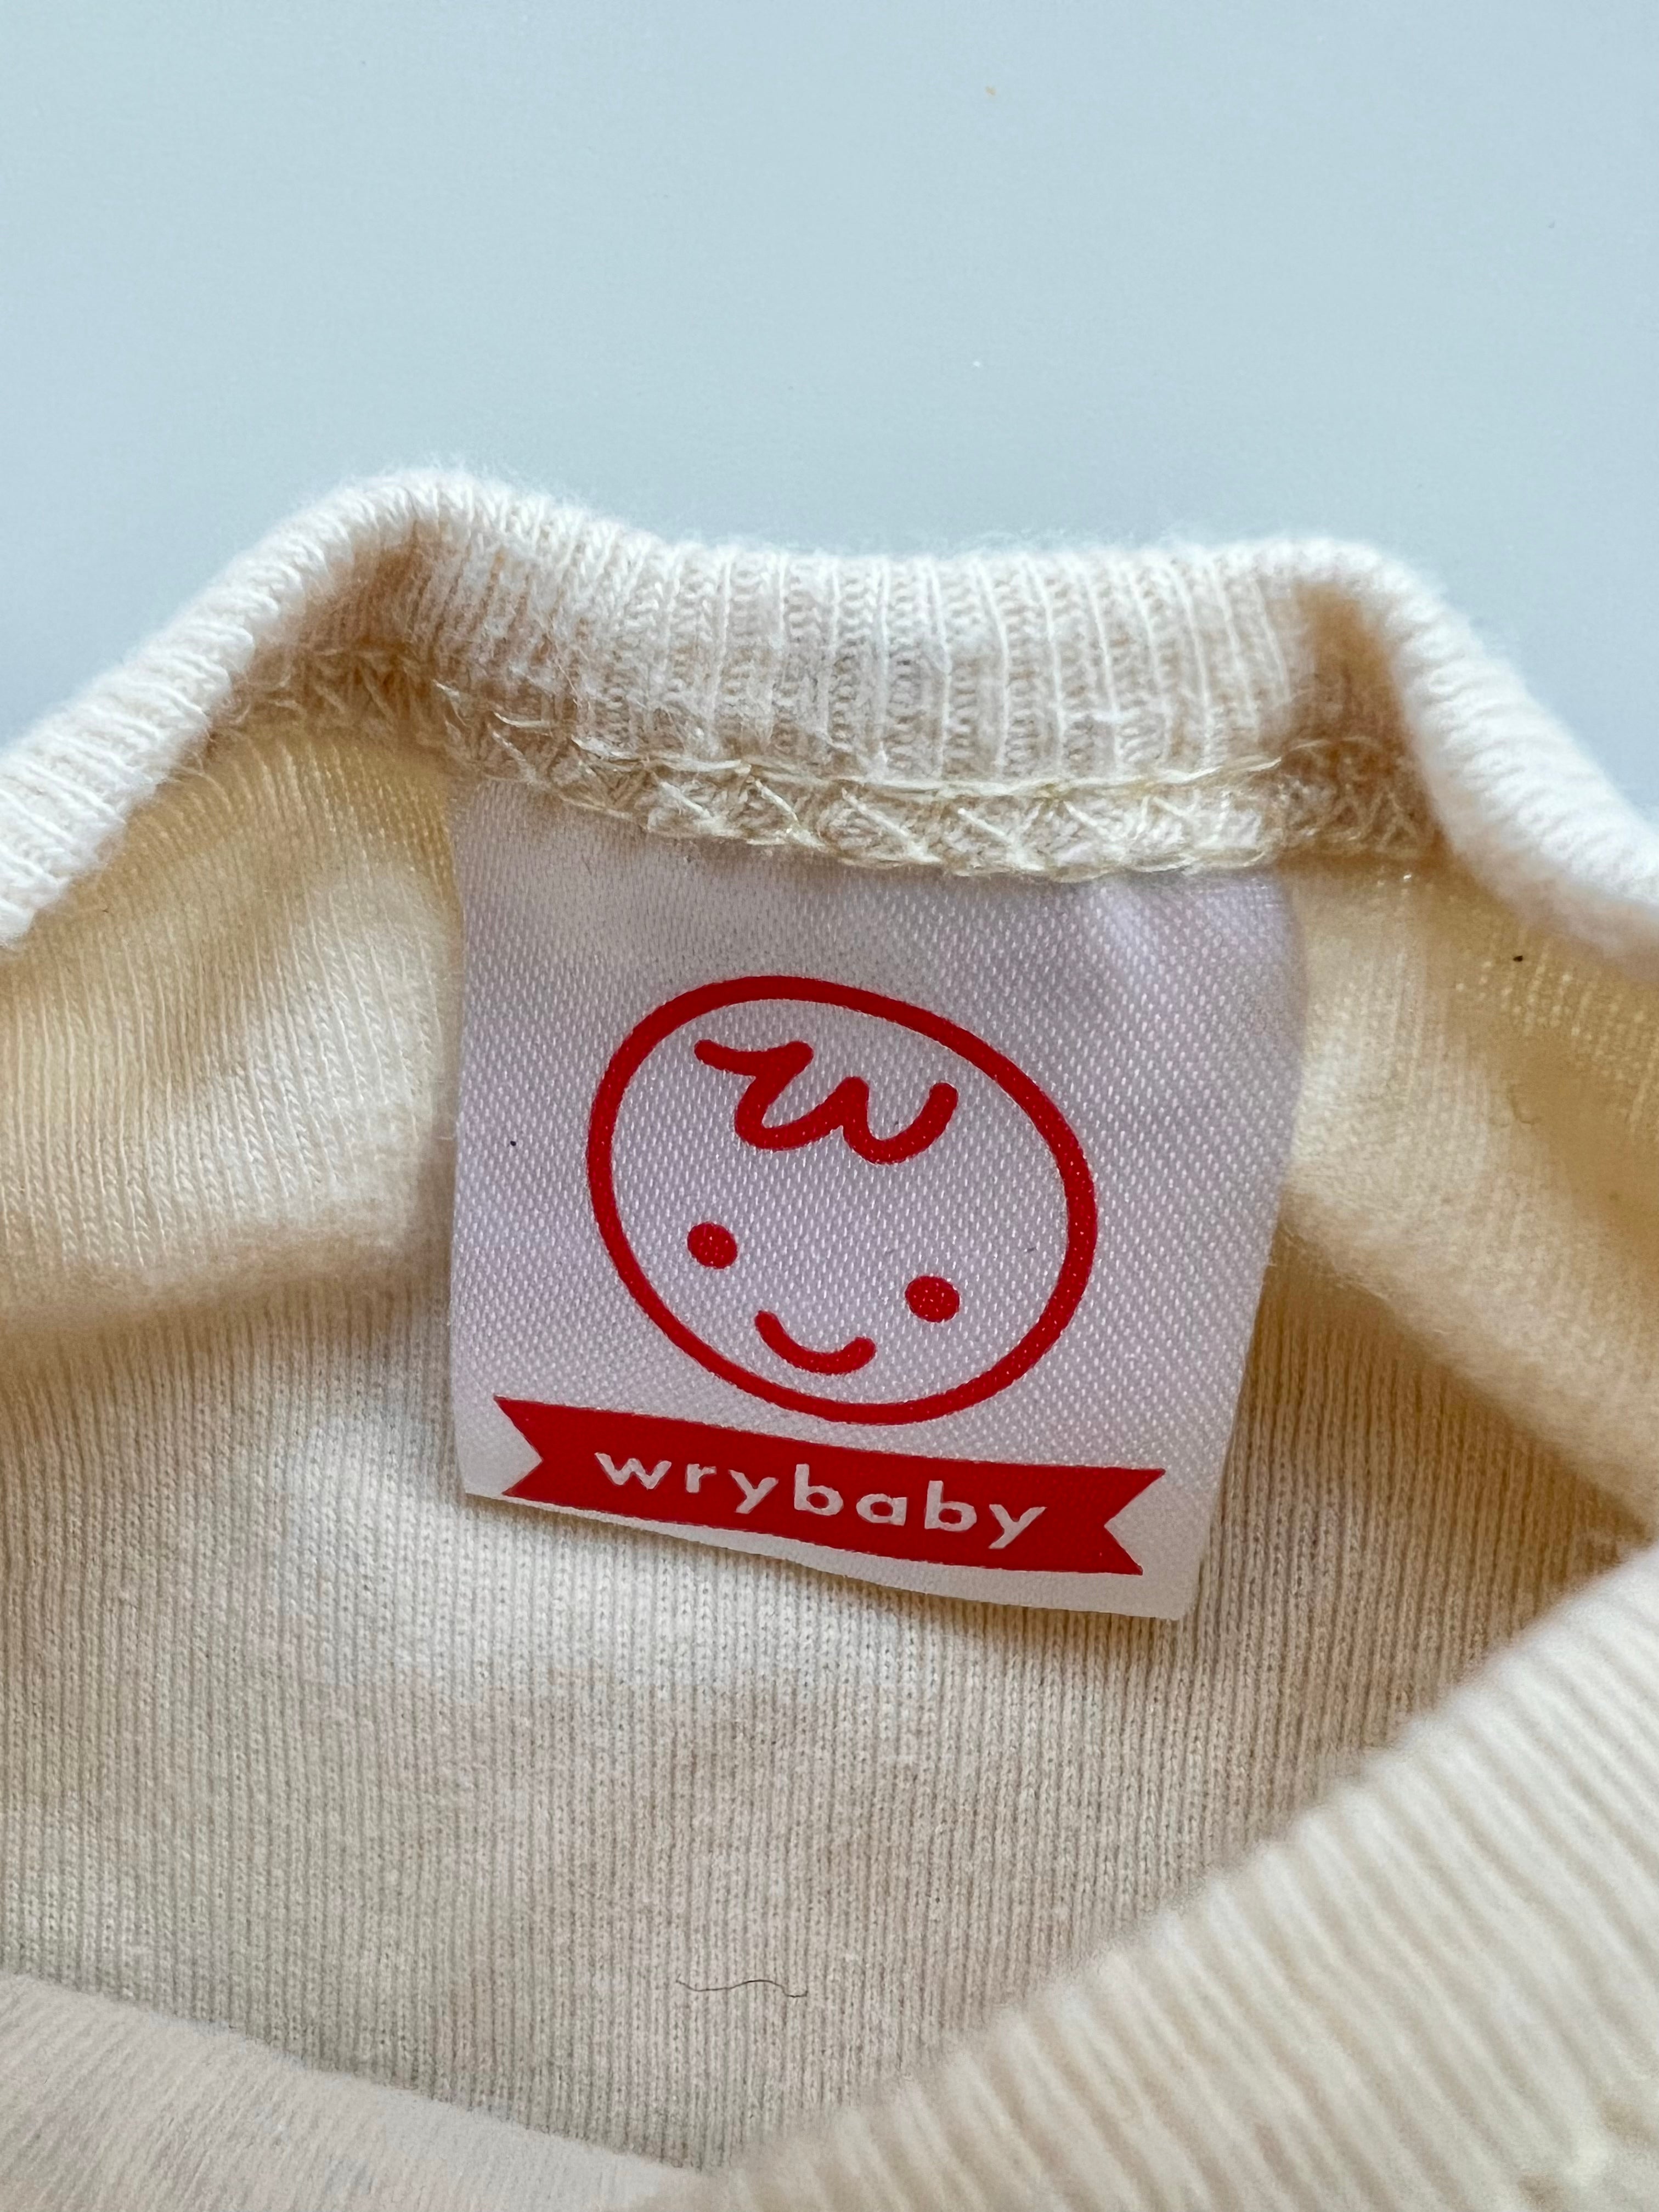 Wrybaby T-shirt 3-6 Months